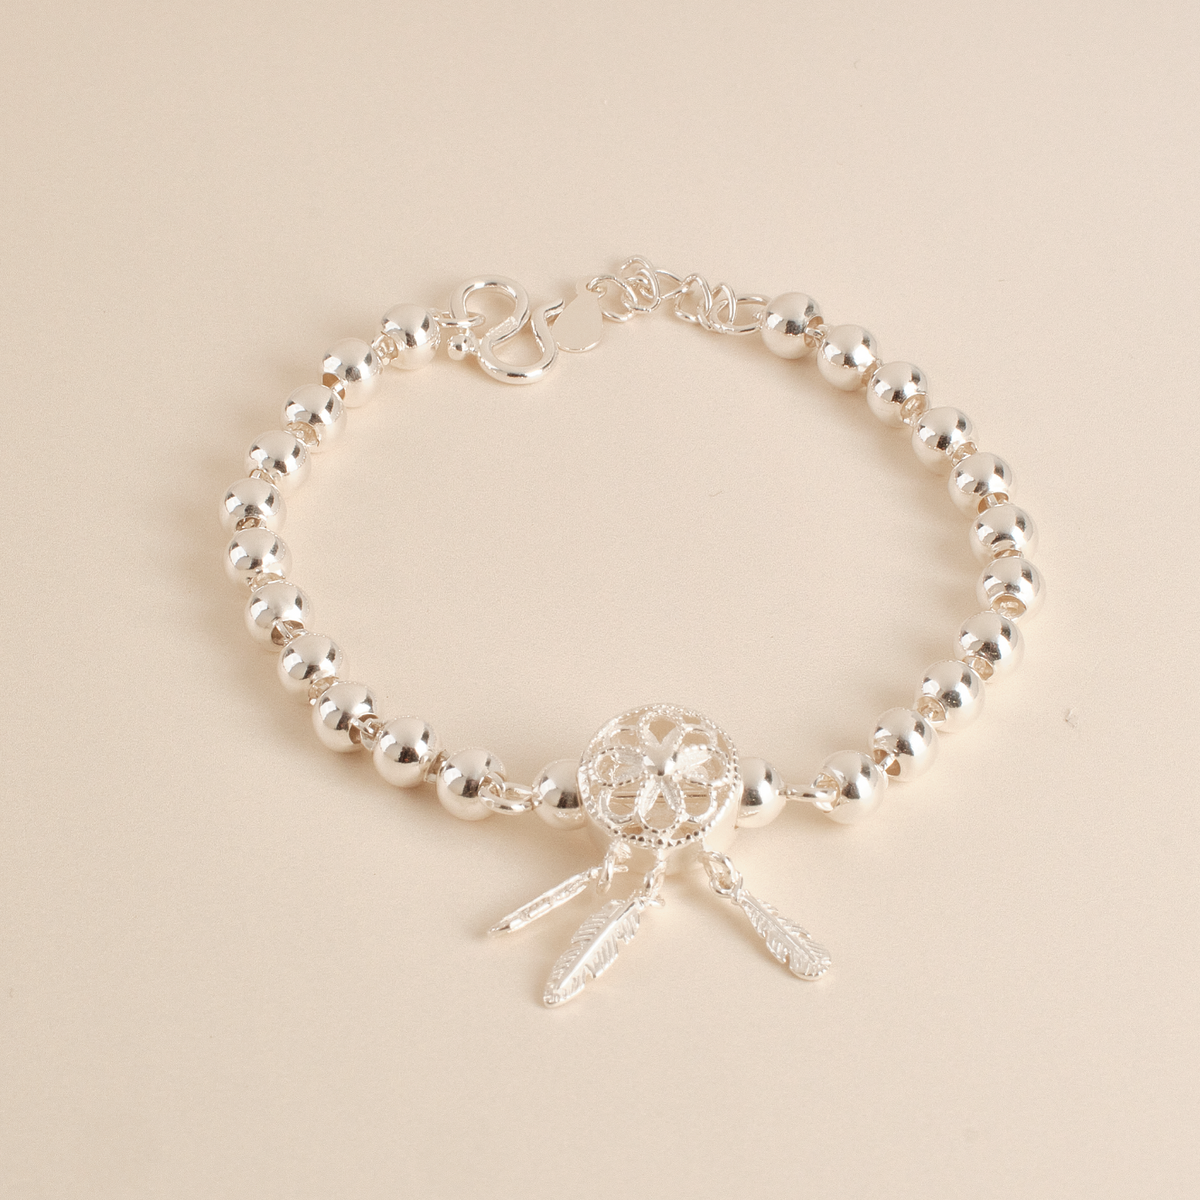 Dreamcatcher Beads Bracelet